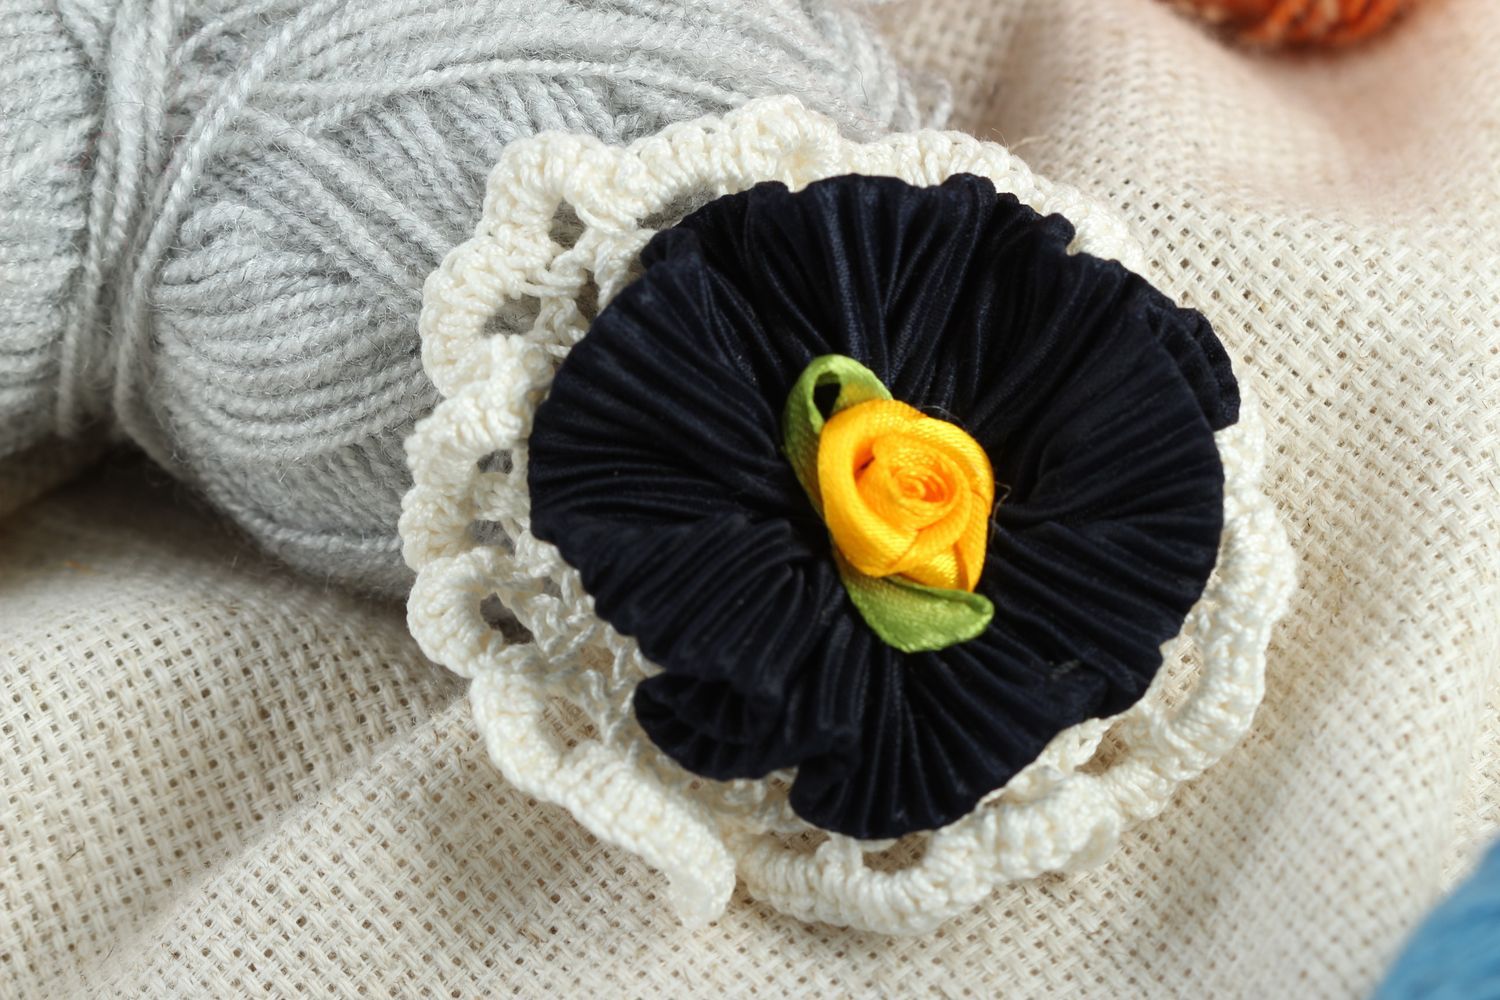 Handmade crochet flower decorative flowers jewelry craft supplies crochet ideas photo 1